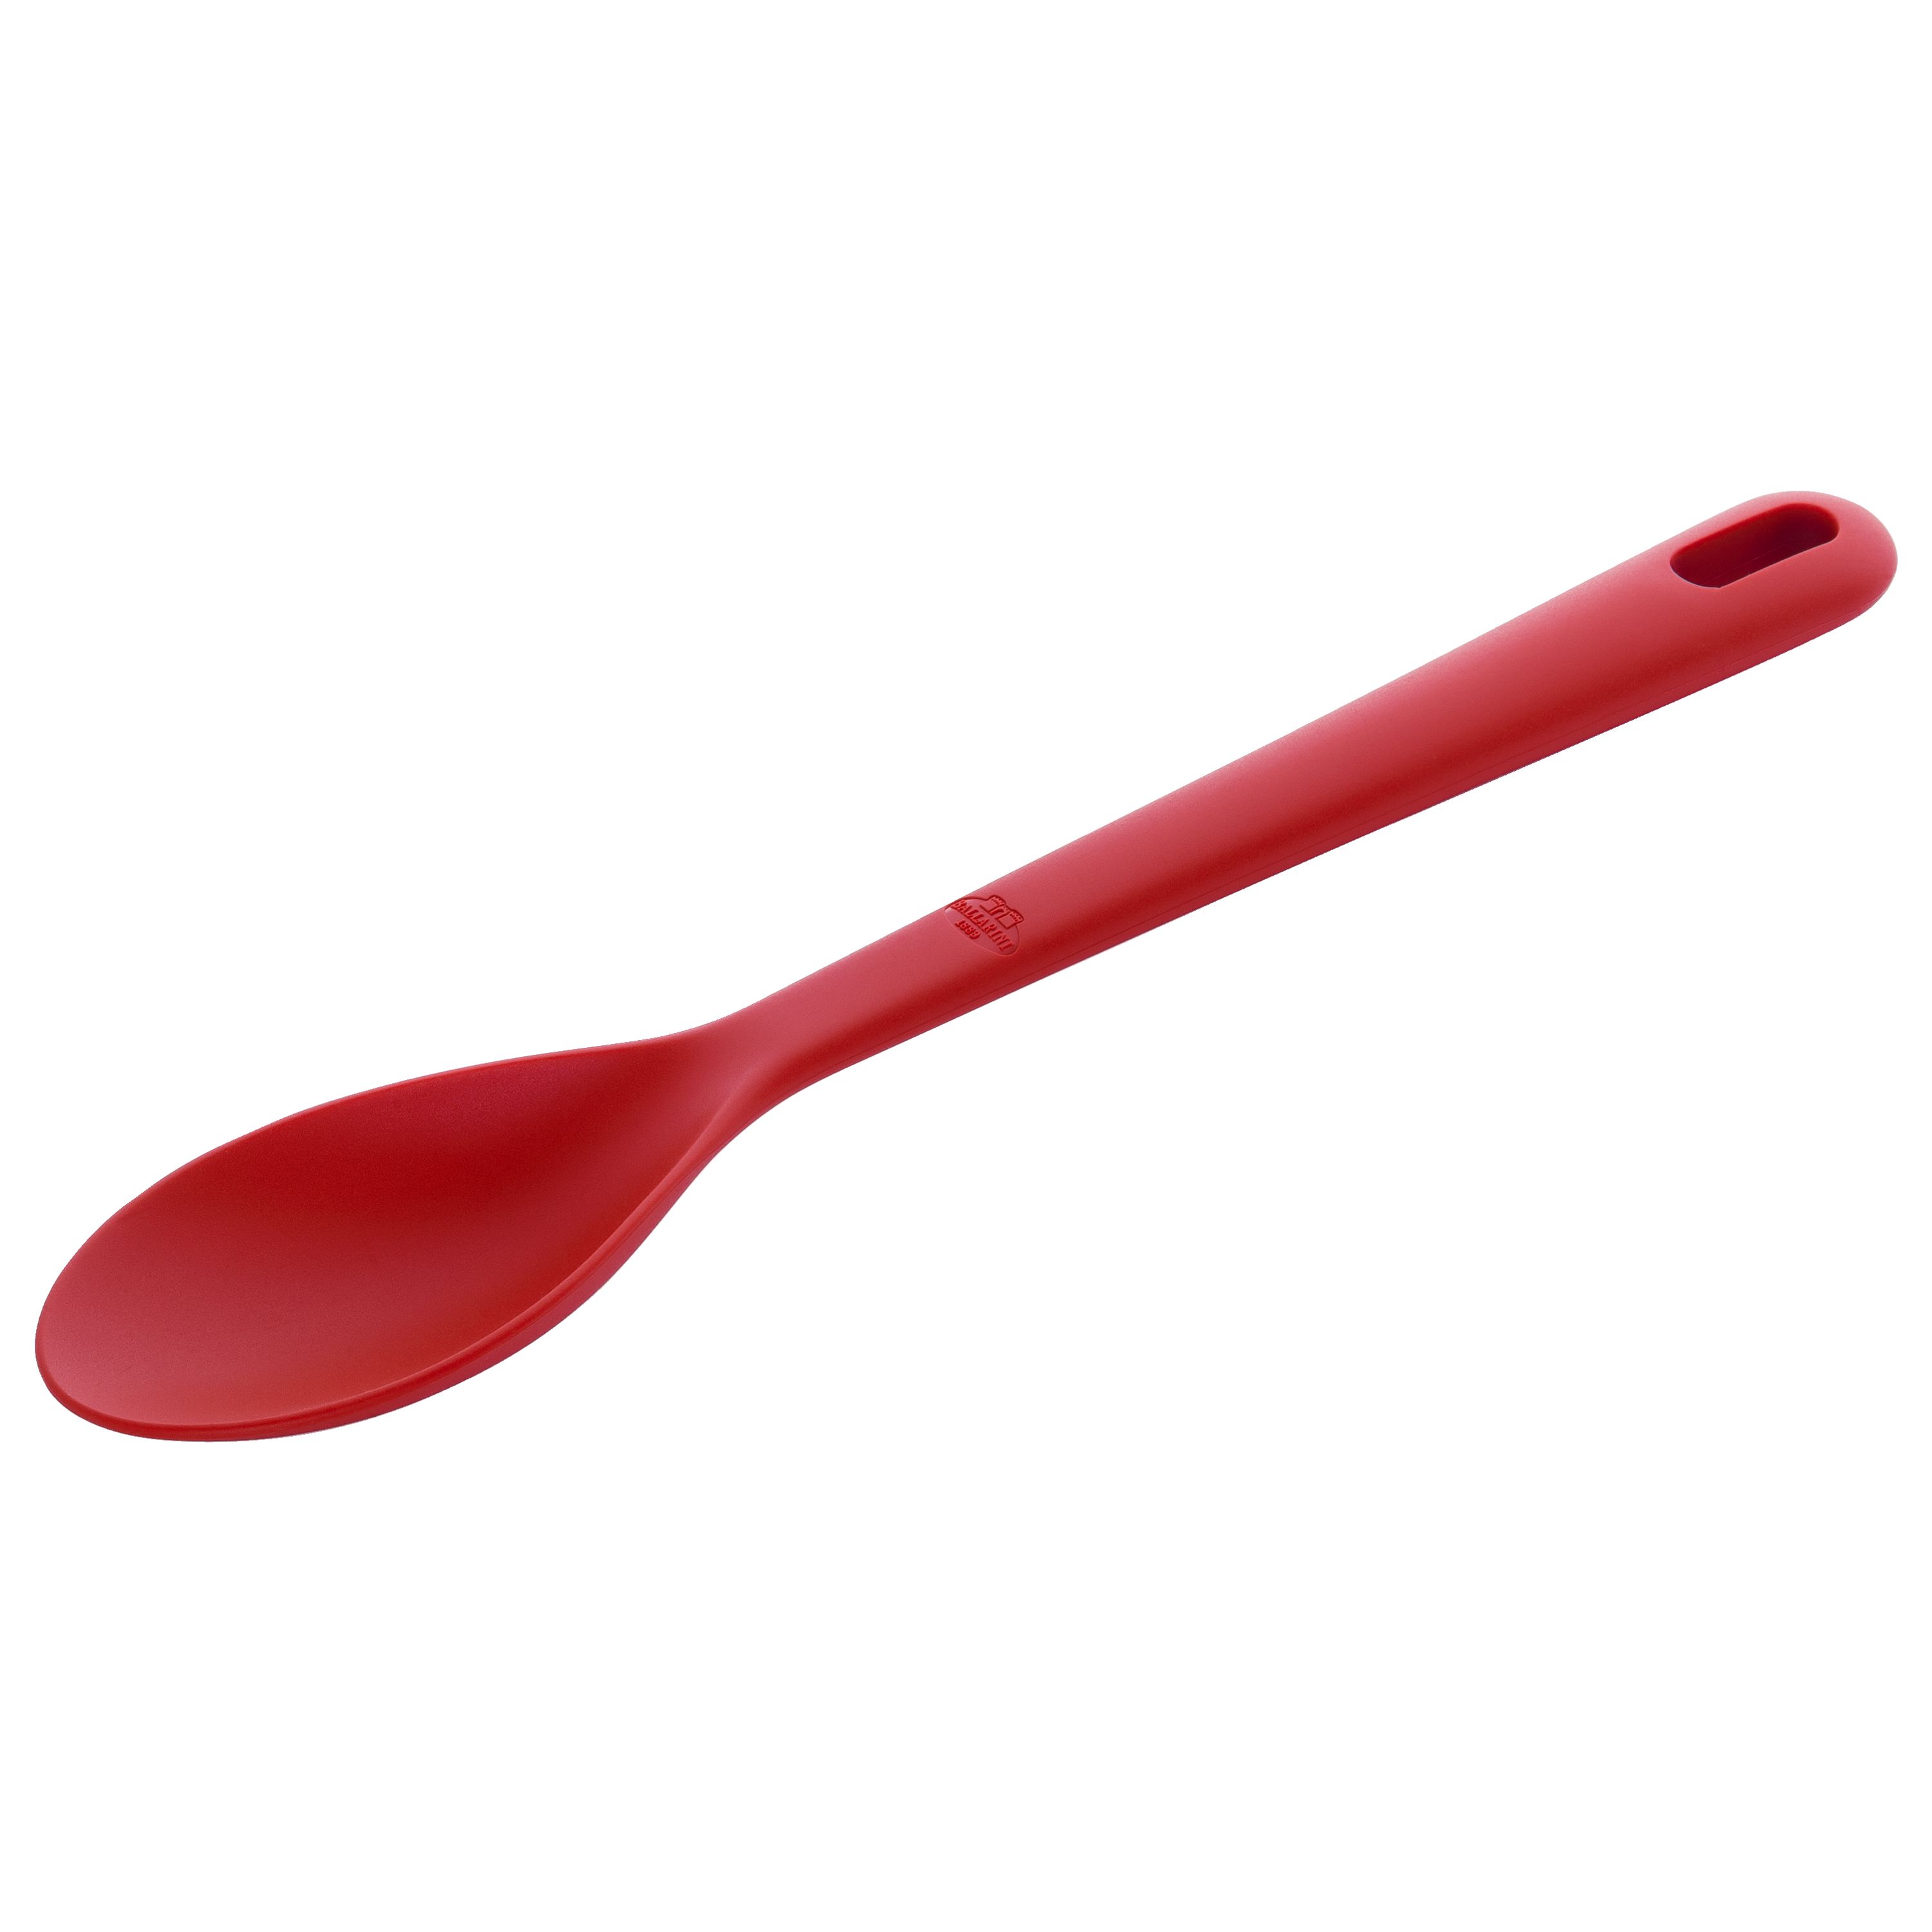 Food Grade Silicone Heat-Resistant Non-Stick Rice Spoon Black/Red